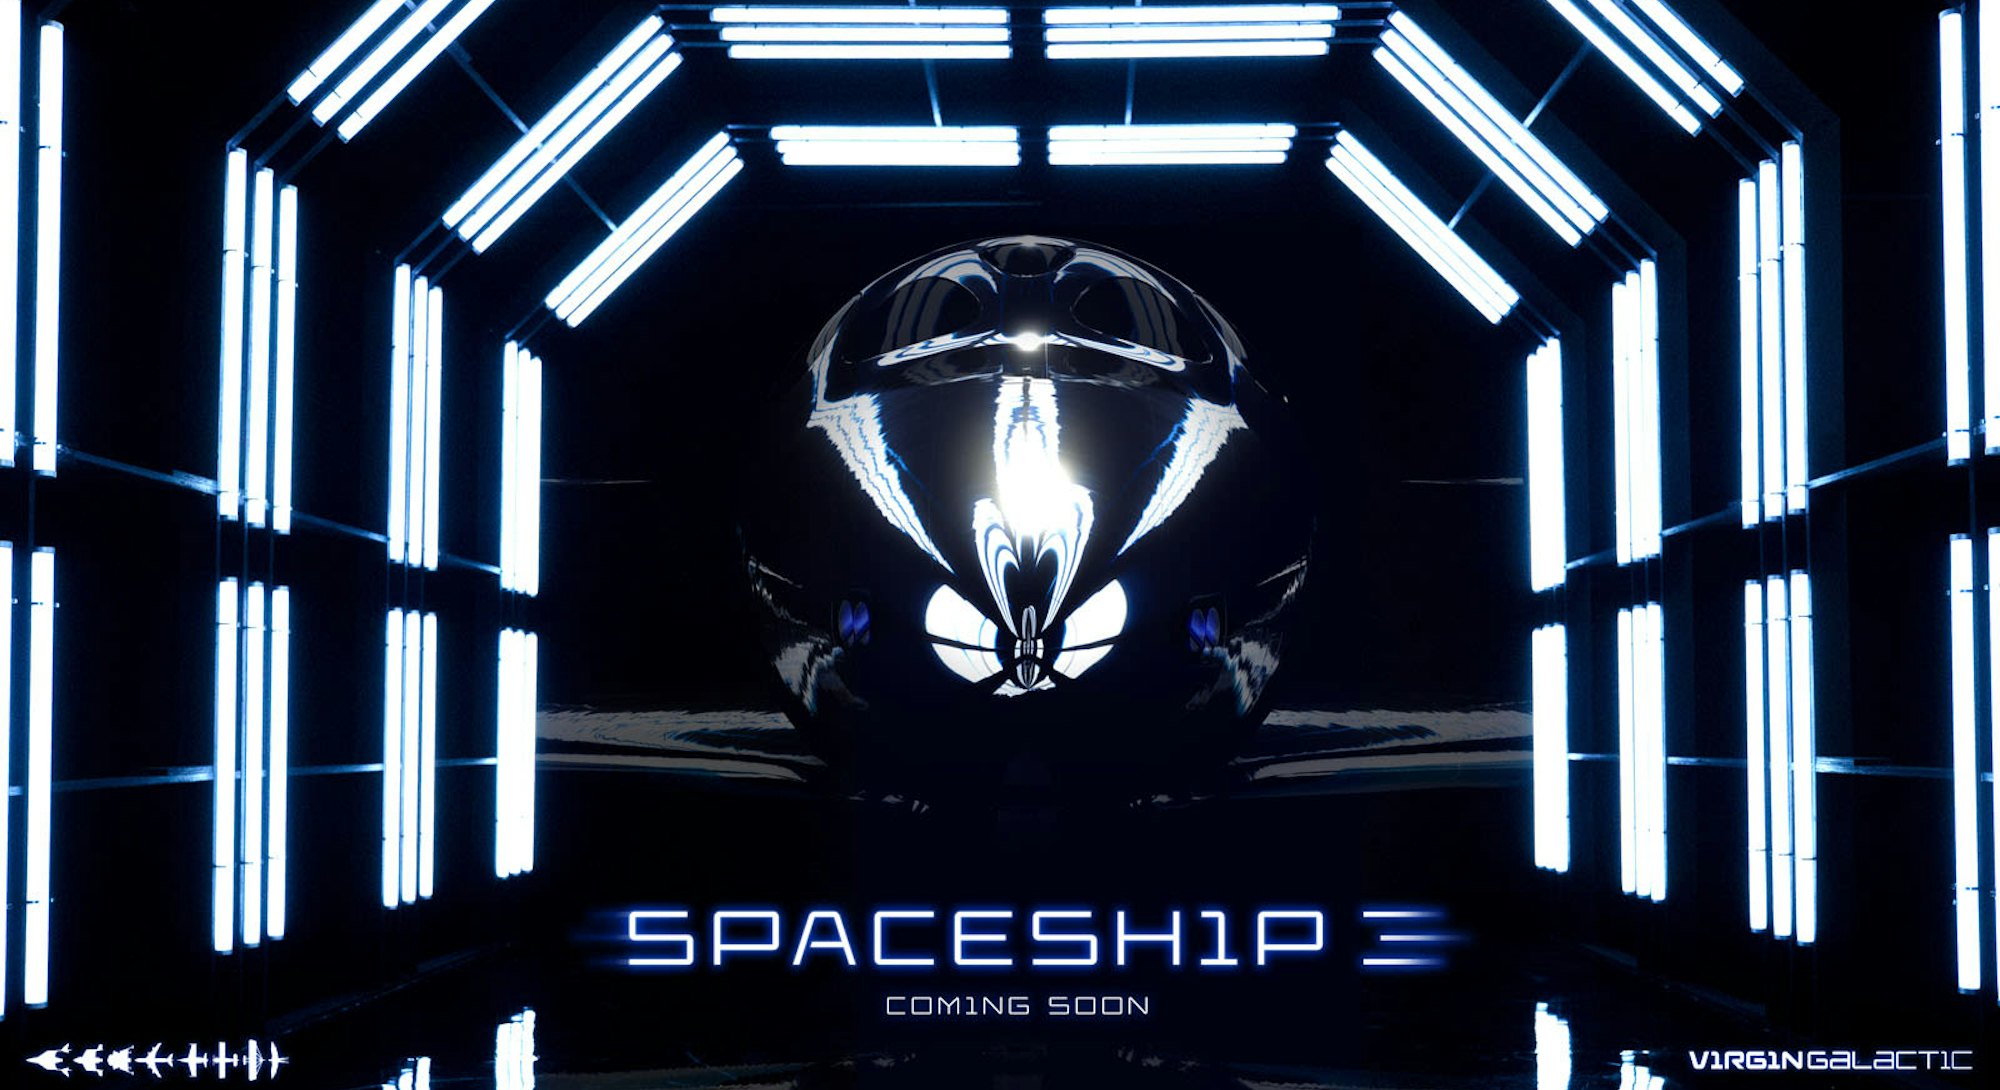 Virgin Galactic Spaceship 3 poster